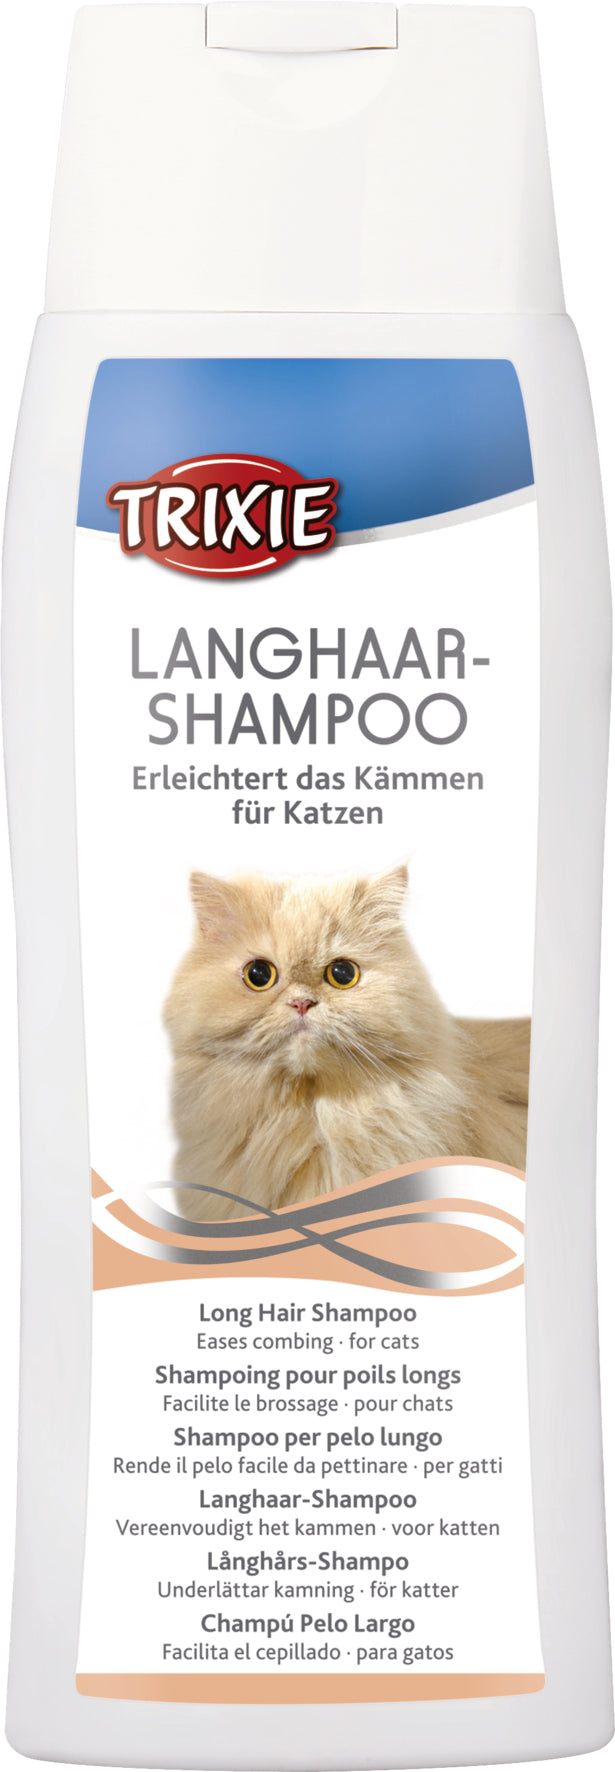 Trixie Cat Shampoo for Long Hair